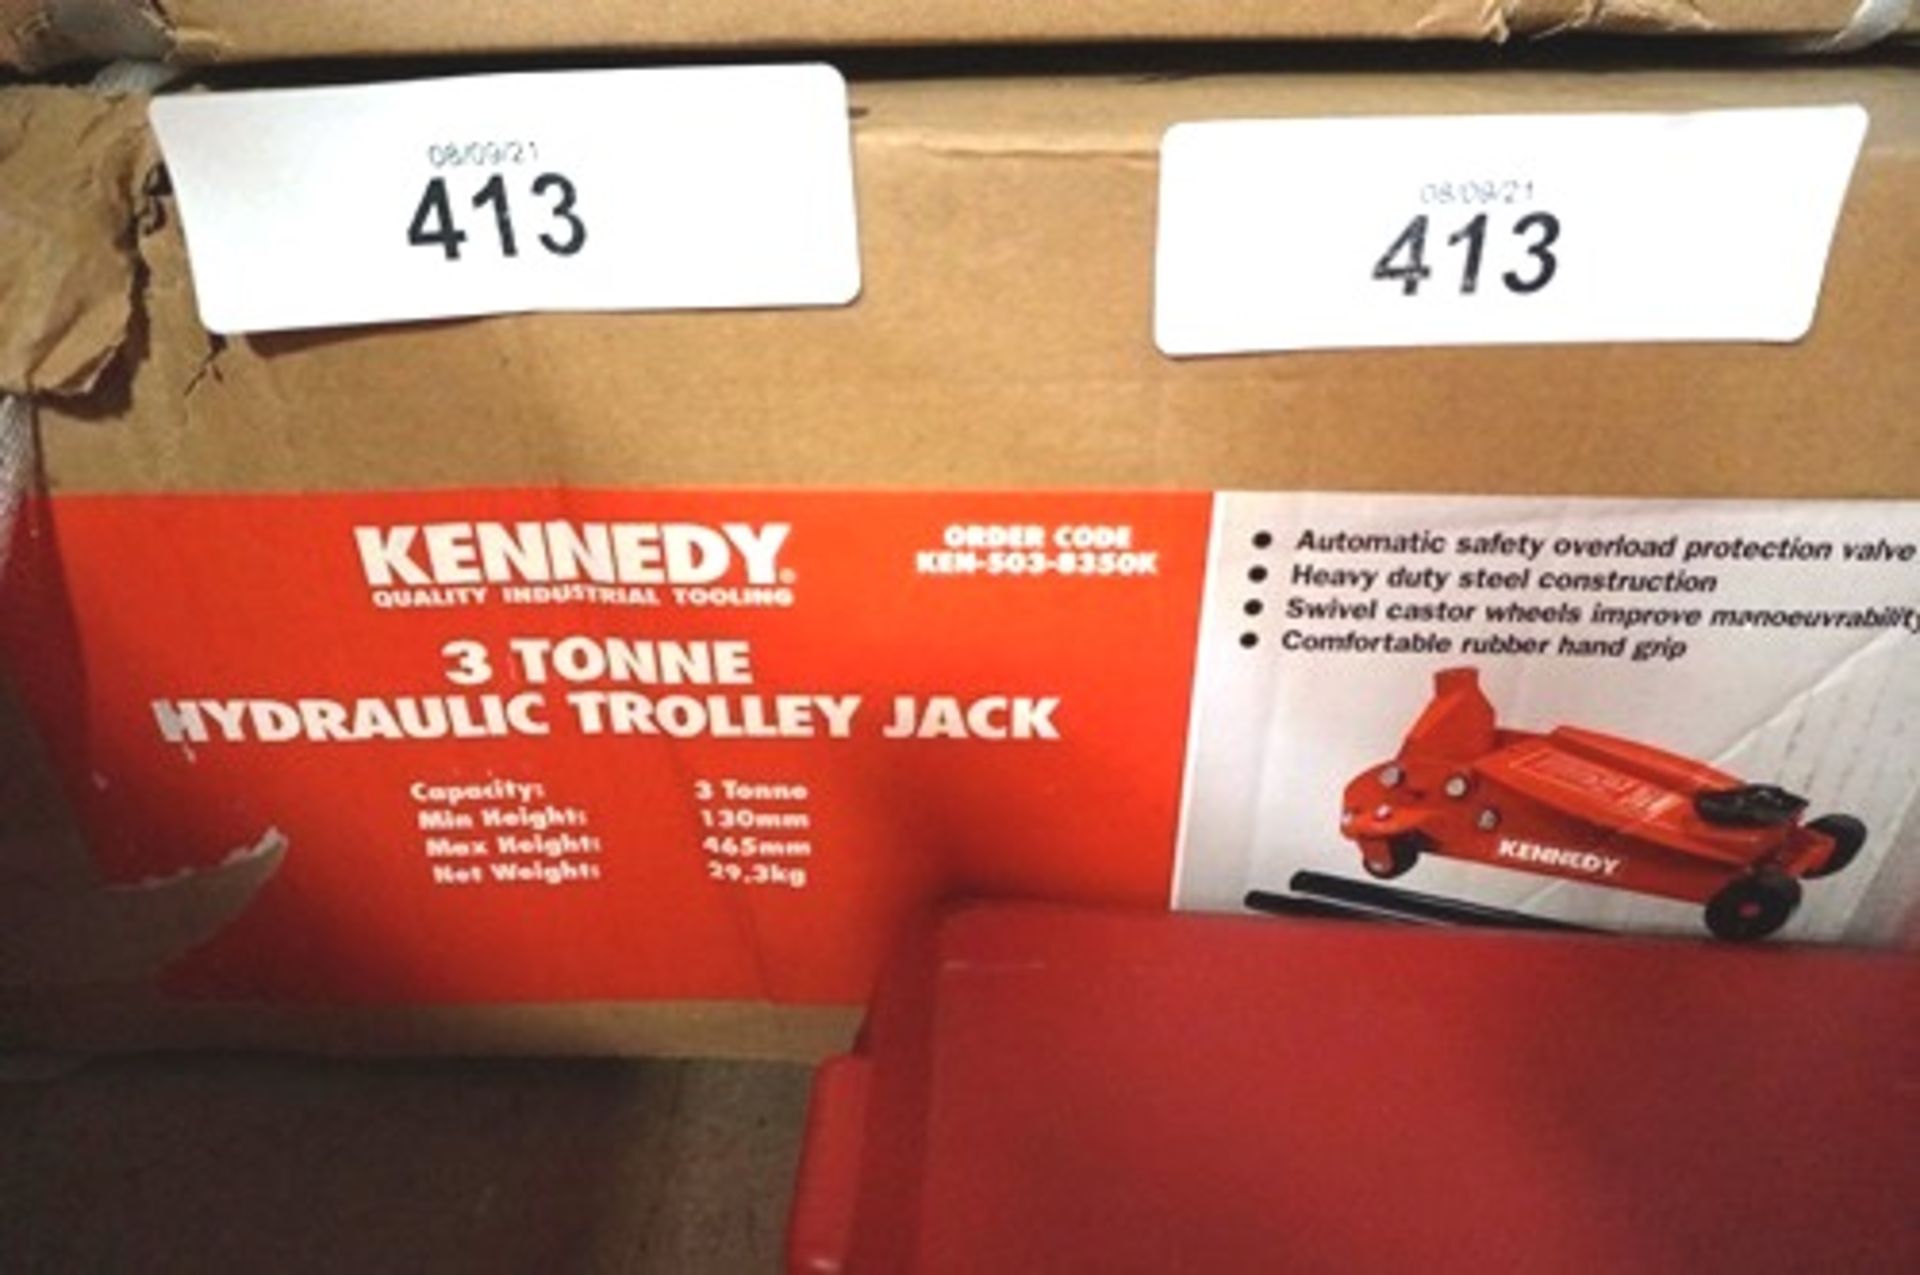 1 x Kenney 3 tonne hydraulic trolley jack, model KEN-503-835OK - Sealed new in box (GS13)